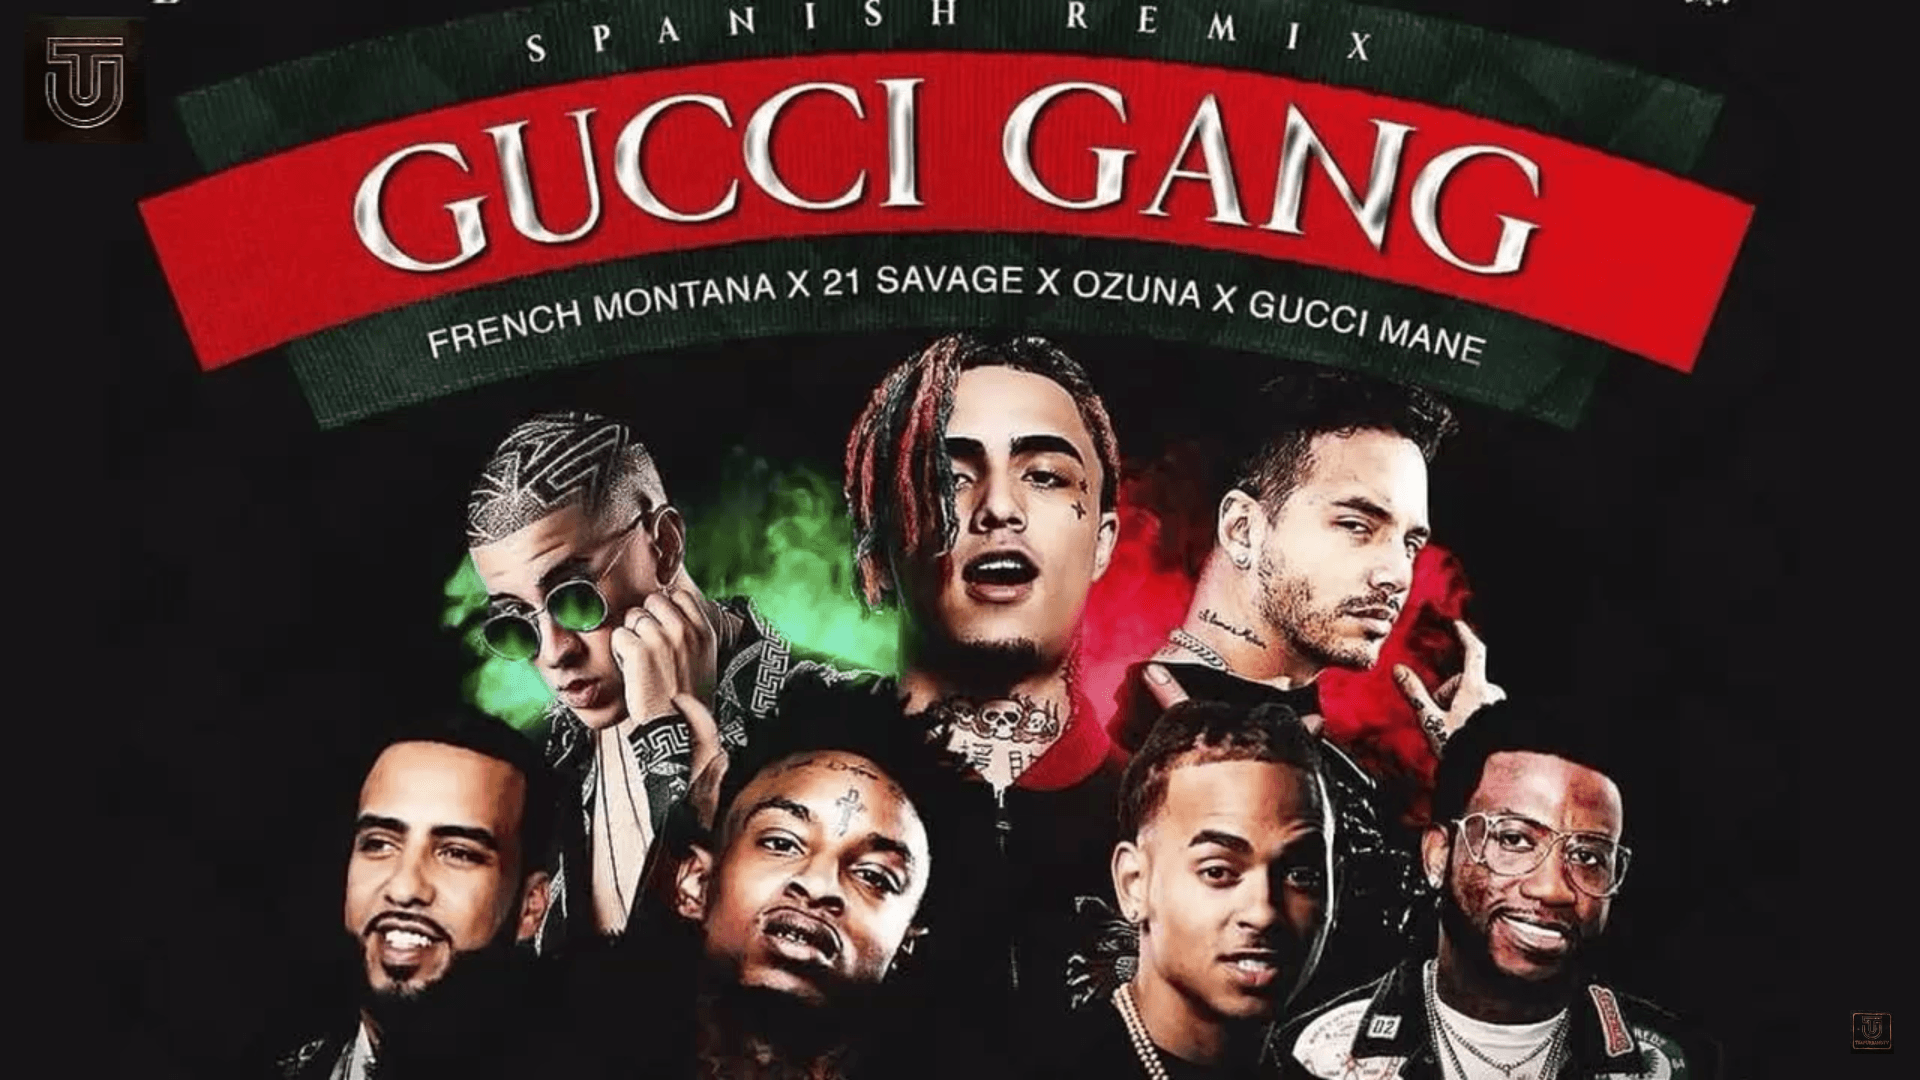 Lil Pump Drops 'Gucci Gang' All Star Latin Remix With J Balvin